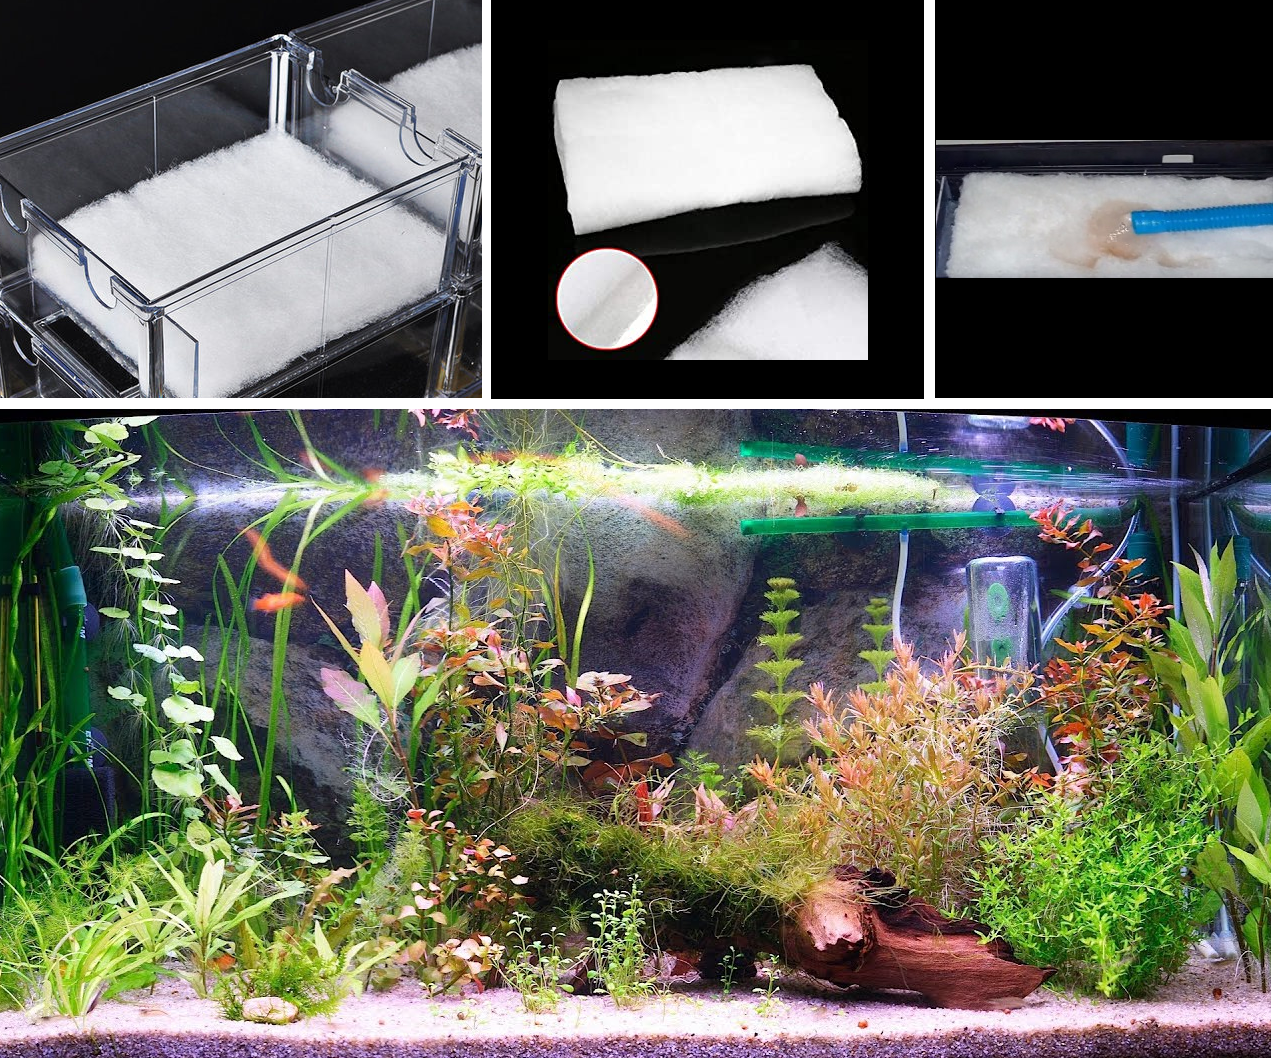 DESPACITO® Aquarium White Sponge Filter for Fish Tank (XY-1825) (Size: 100 x 30 x 3cm).